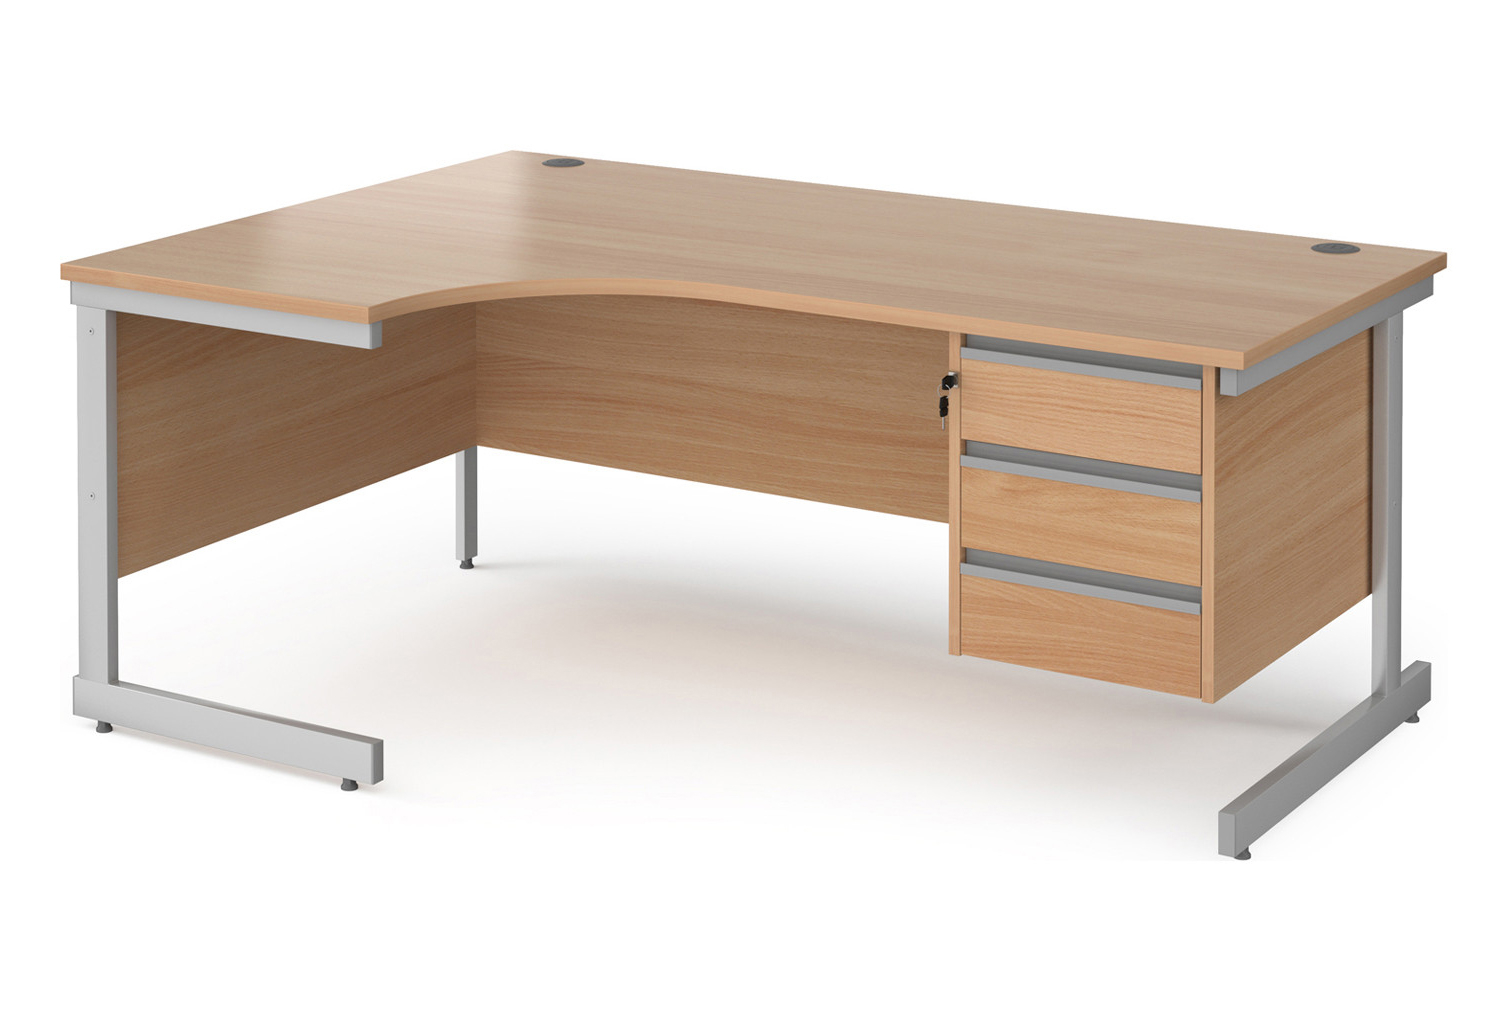 Value Line Classic+ C-Leg Left Ergo Office Desk 3 Drawers (Silver Leg), 180wx120/80dx73h (cm), Beech